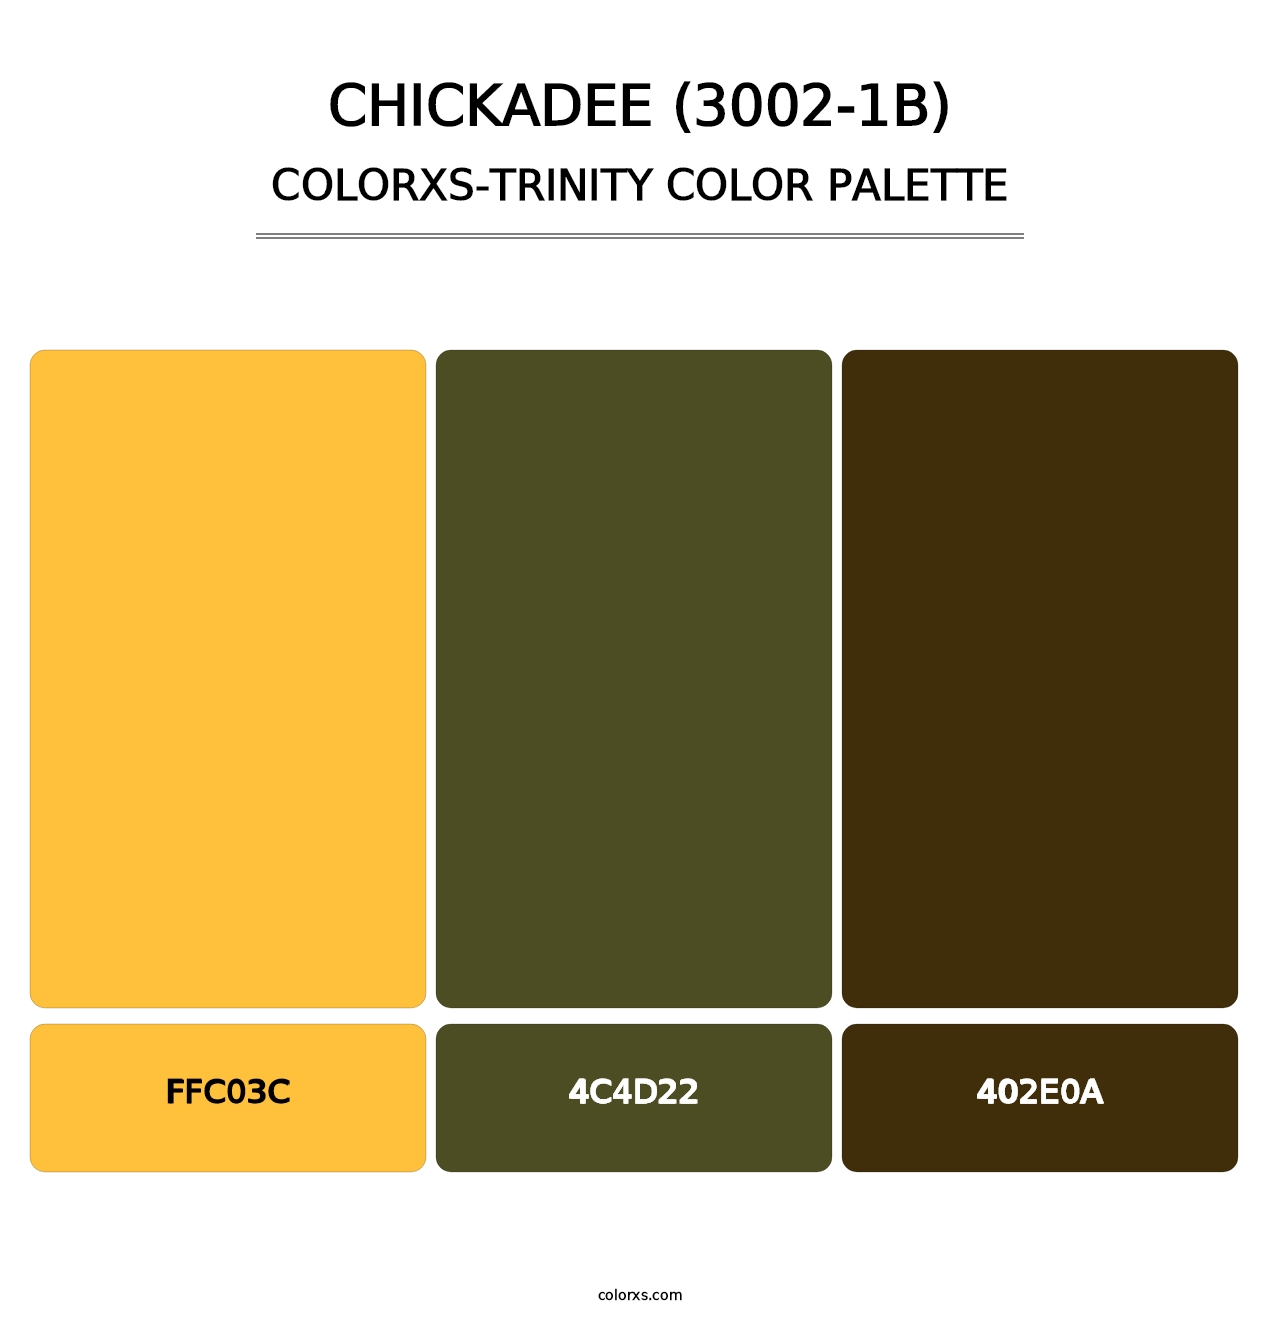 Chickadee (3002-1B) - Colorxs Trinity Palette